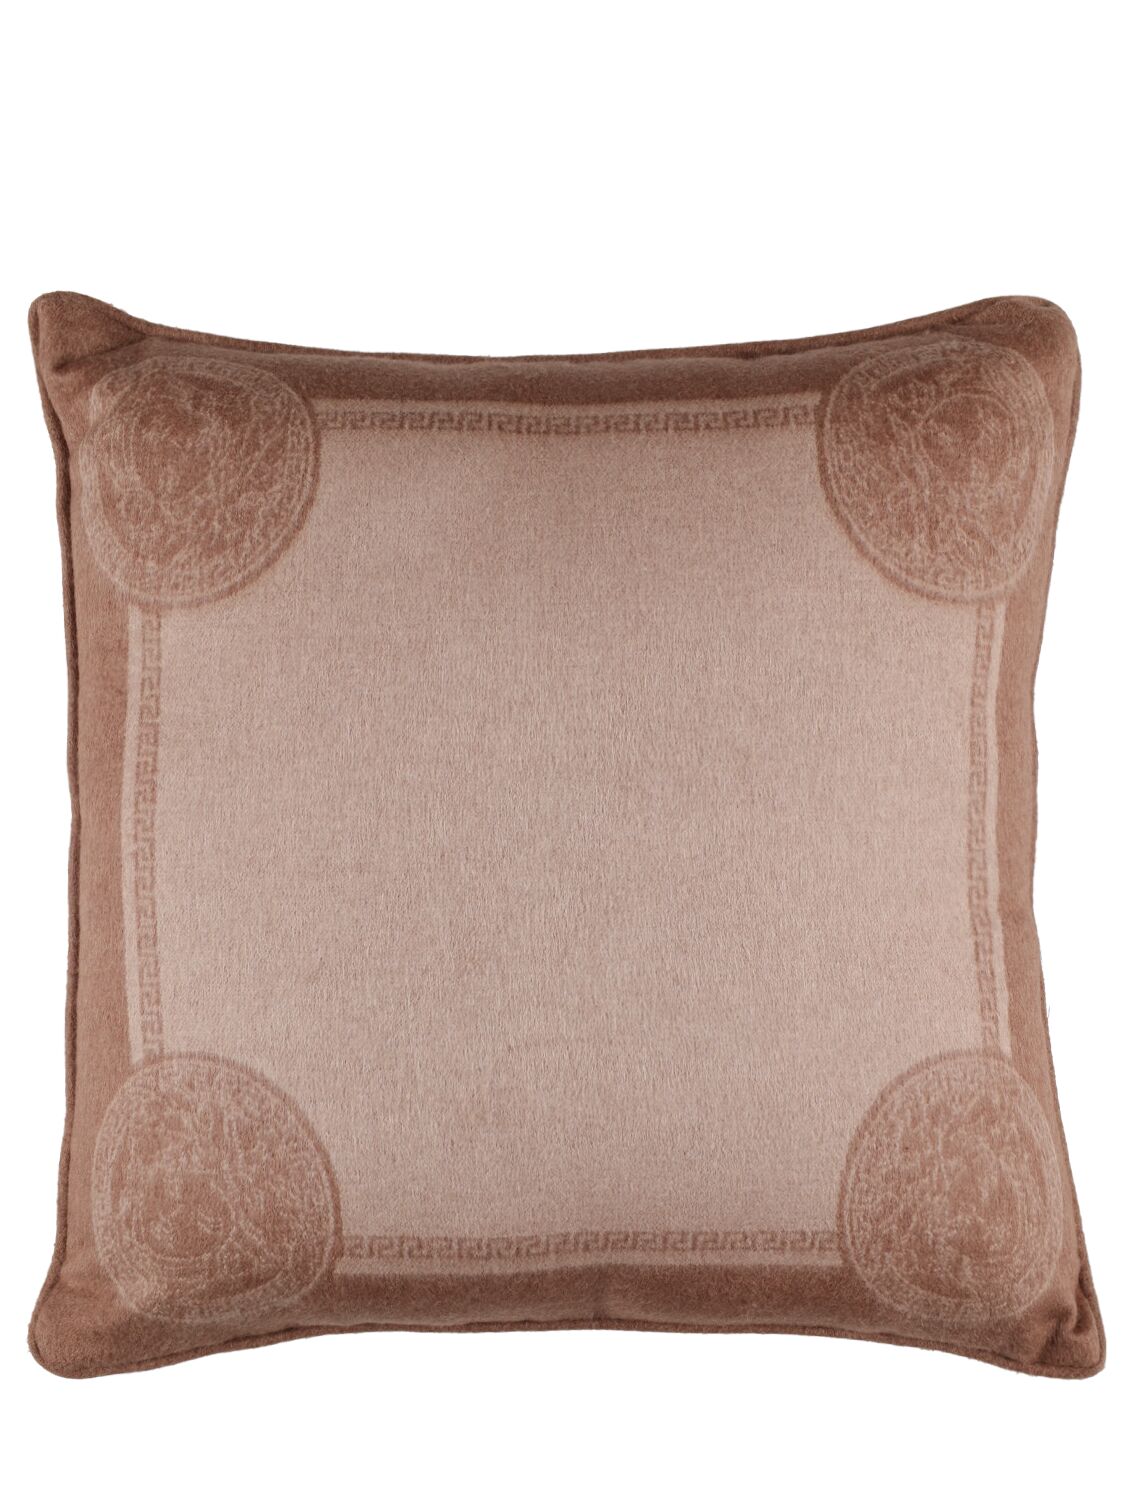 Versace Medusa Cushion In Chocolate